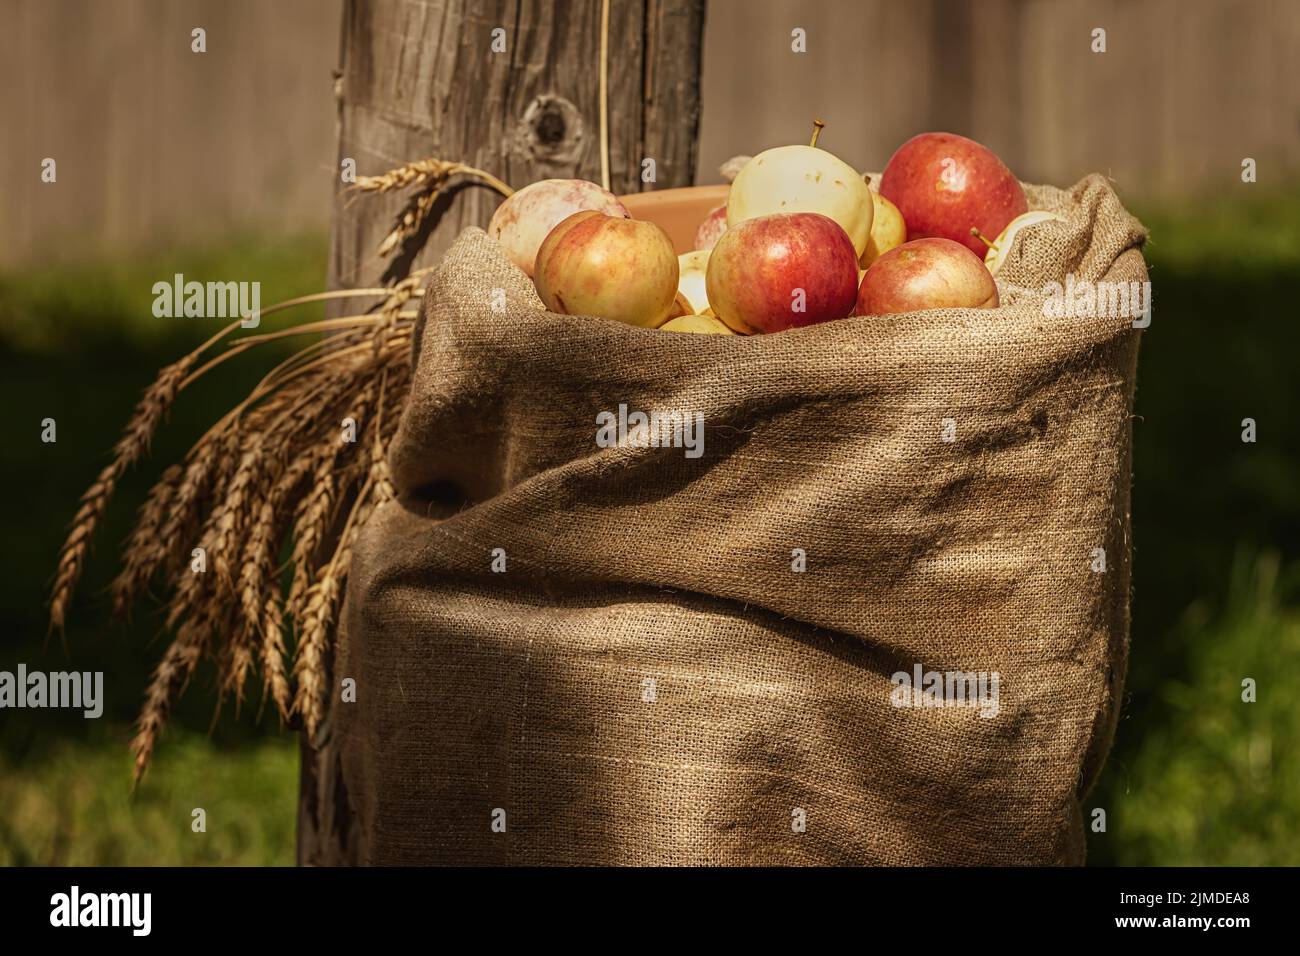 Burlap sack of ripe apples Stock Photo